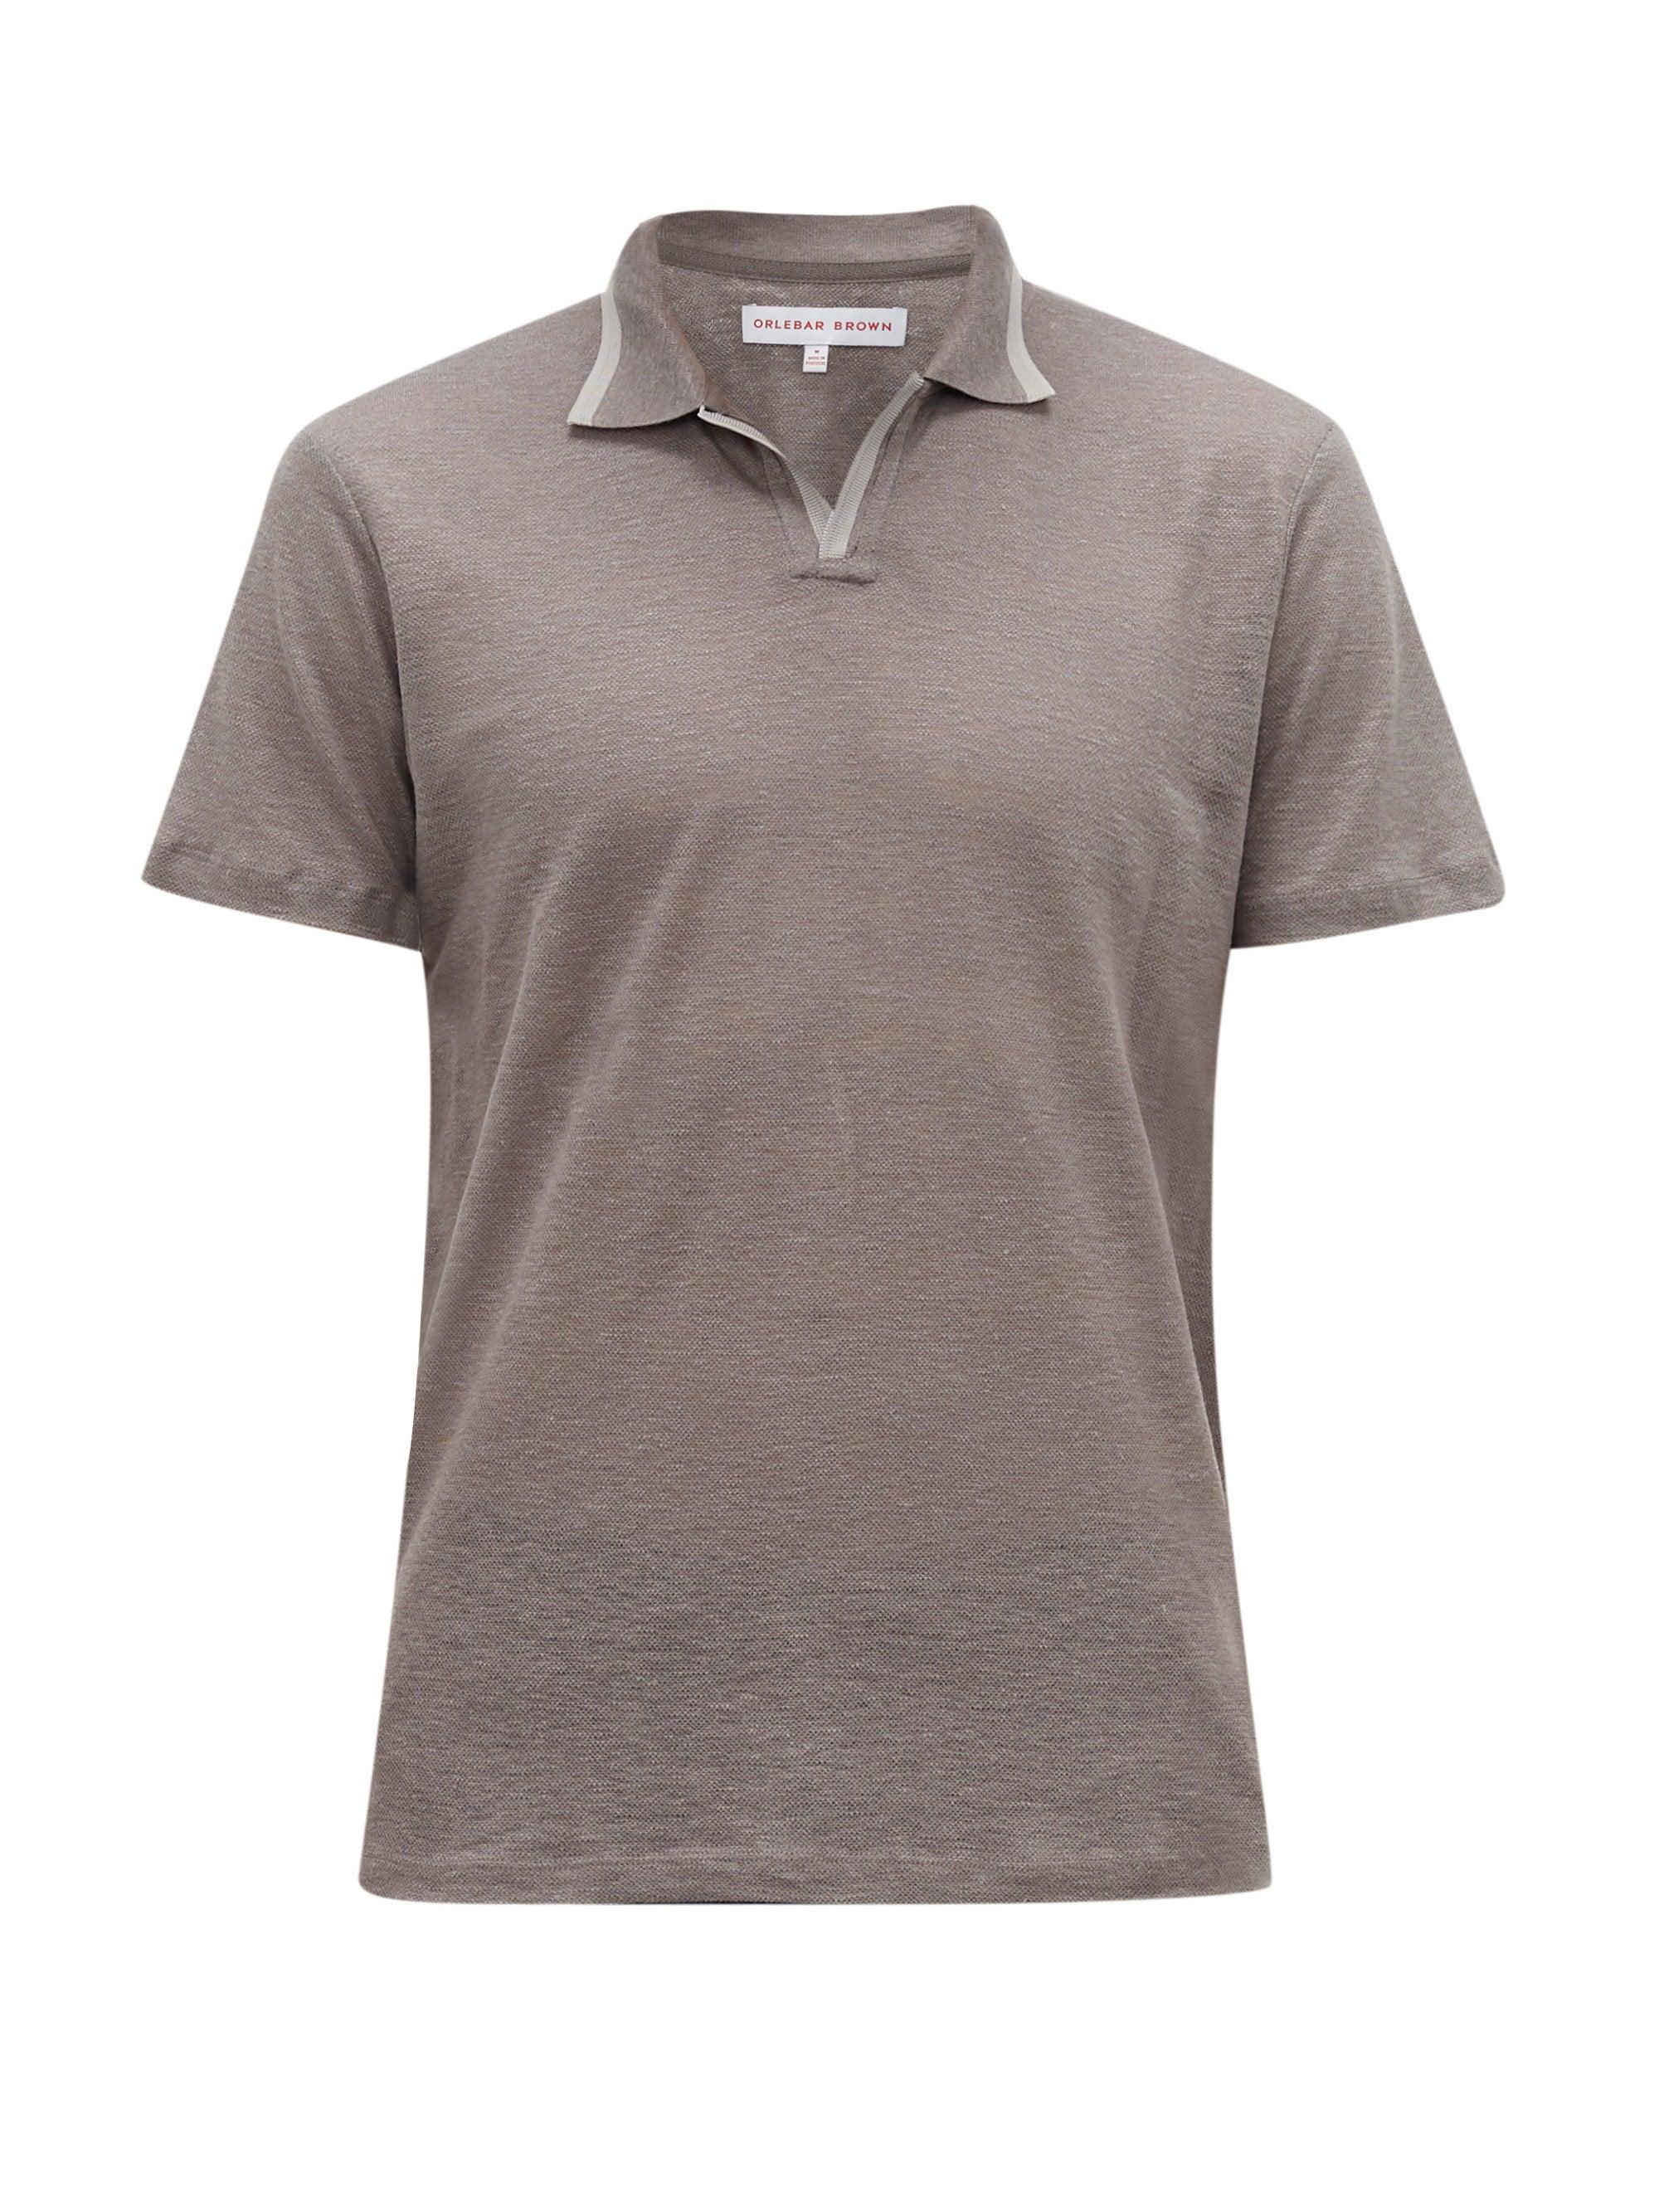 Orlebar Brown Felix Linen-piqué Polo Shirt in Grey (Gray) for Men - Lyst